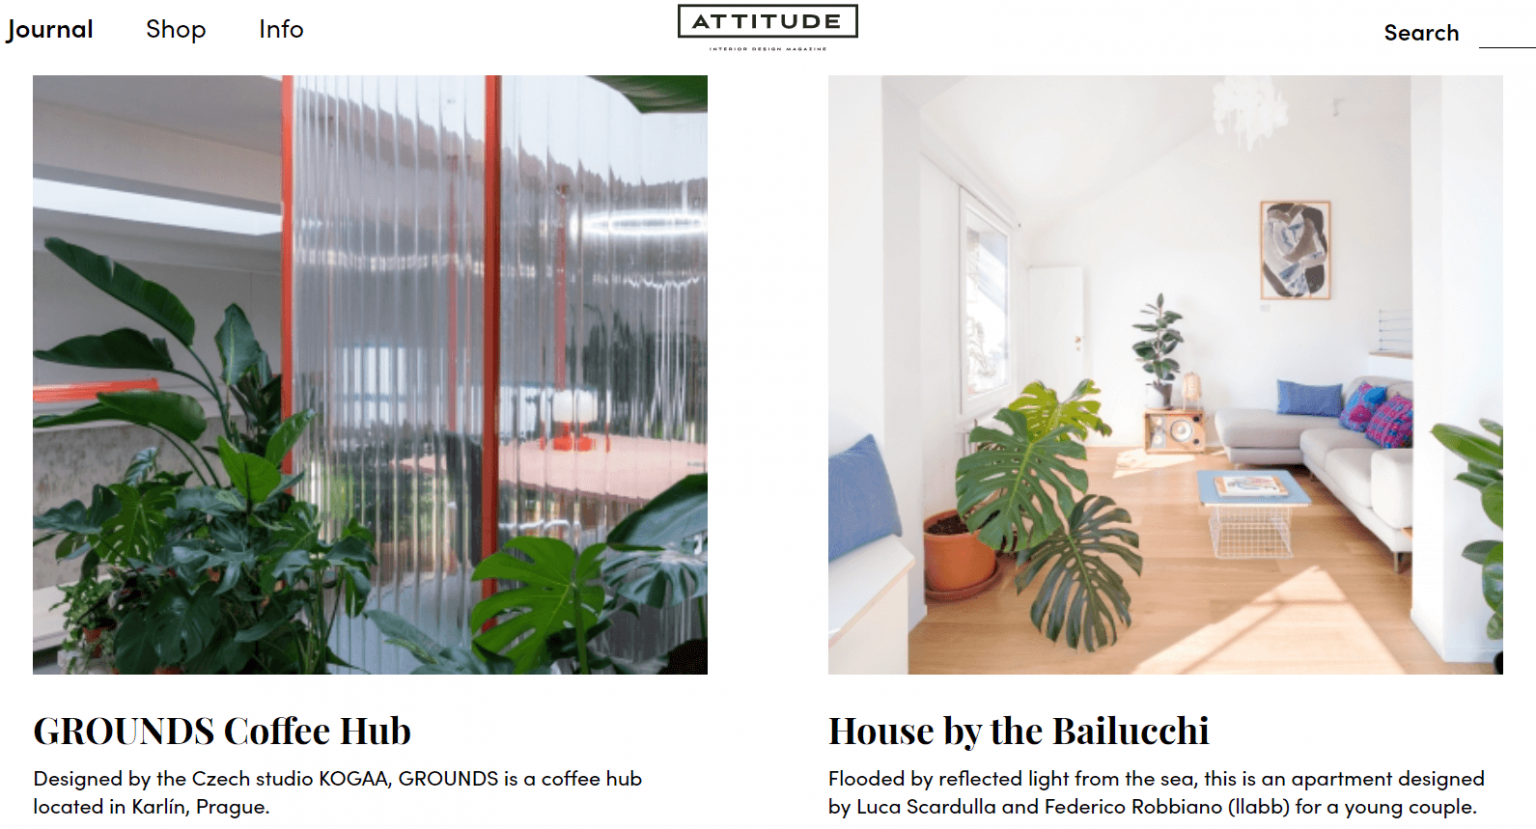 Best Interior Design Magazines: Top-10 Picks for Inspiration